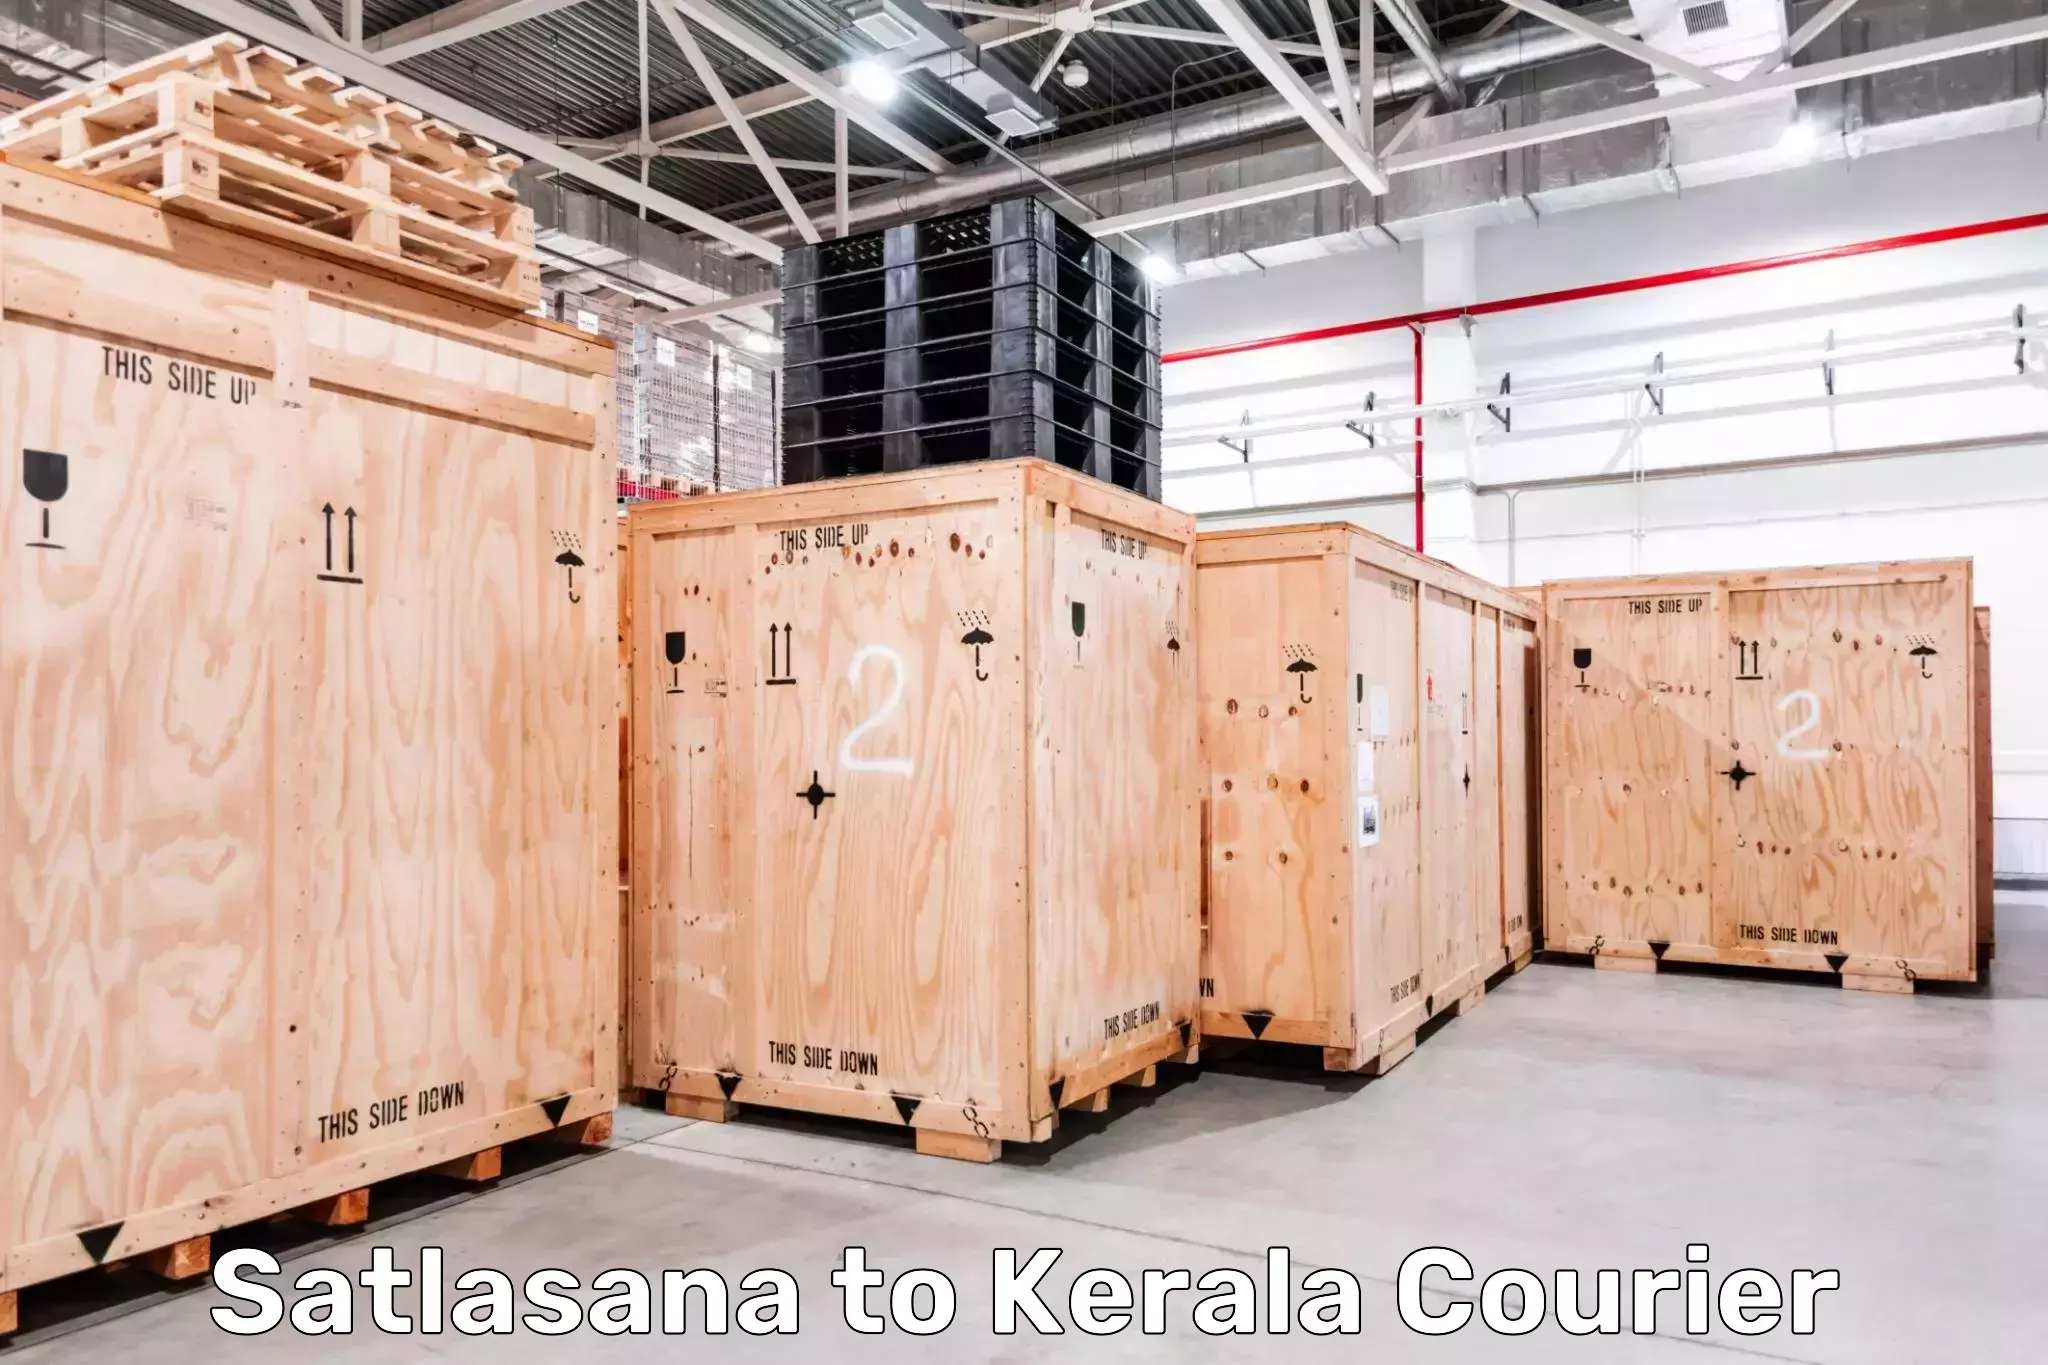 Express delivery capabilities Satlasana to Cochin